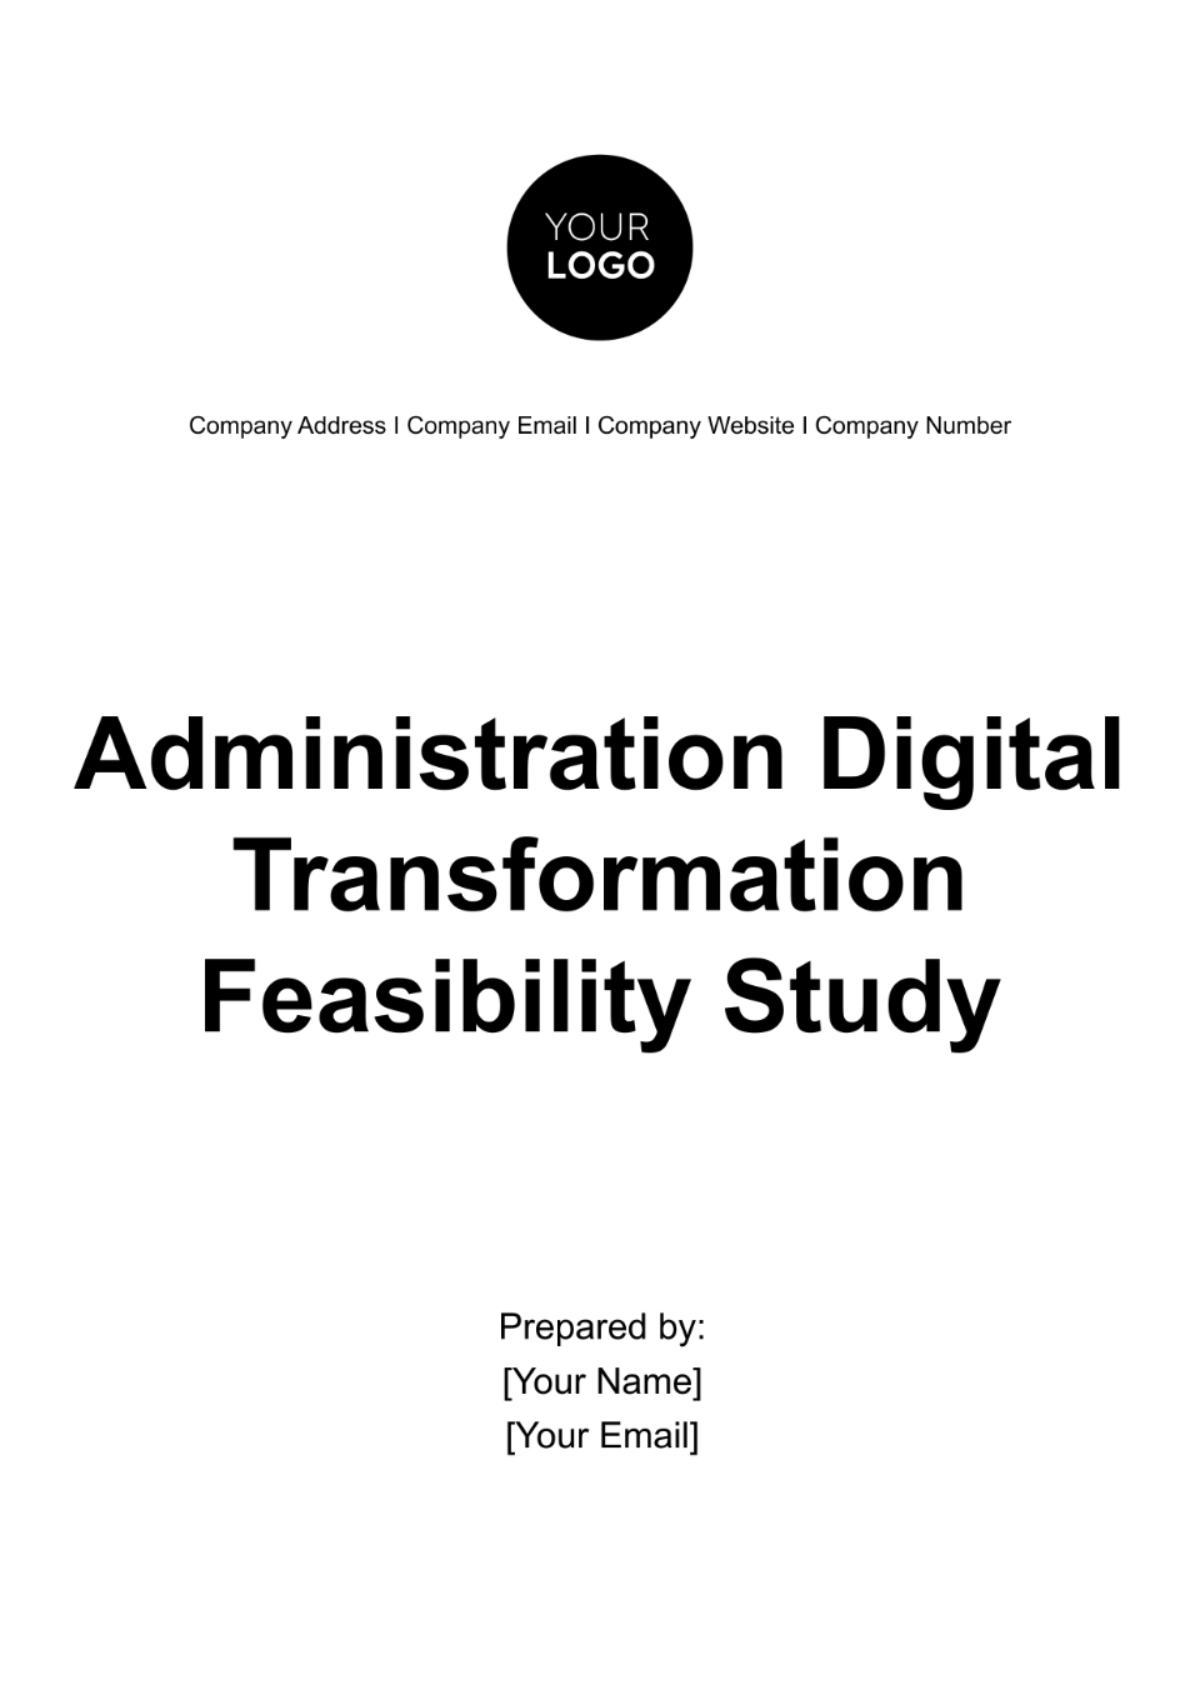 Administration Digital Transformation Feasibility Study Template